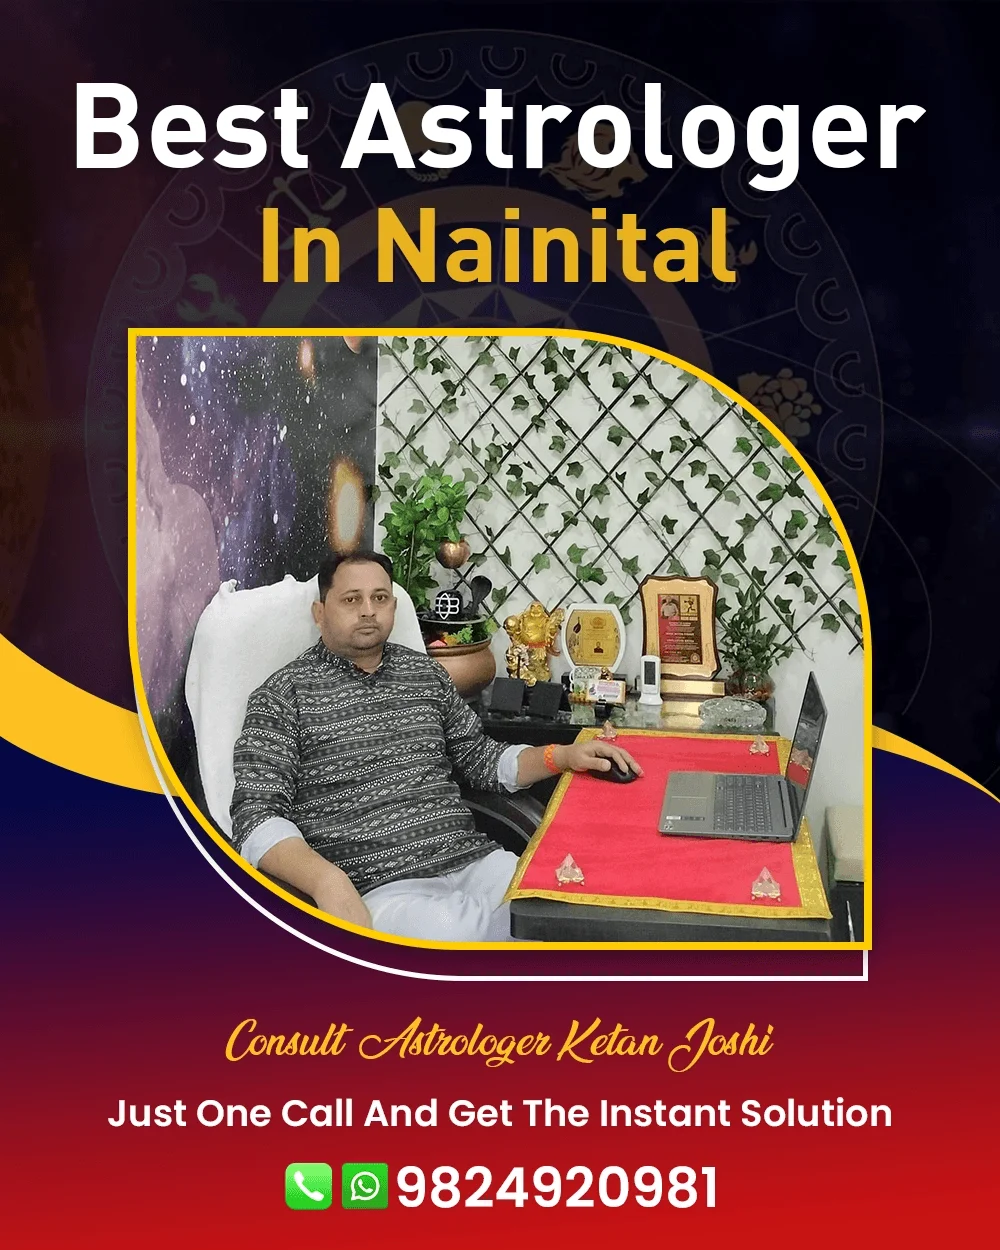 Best Astrologer In Nainital